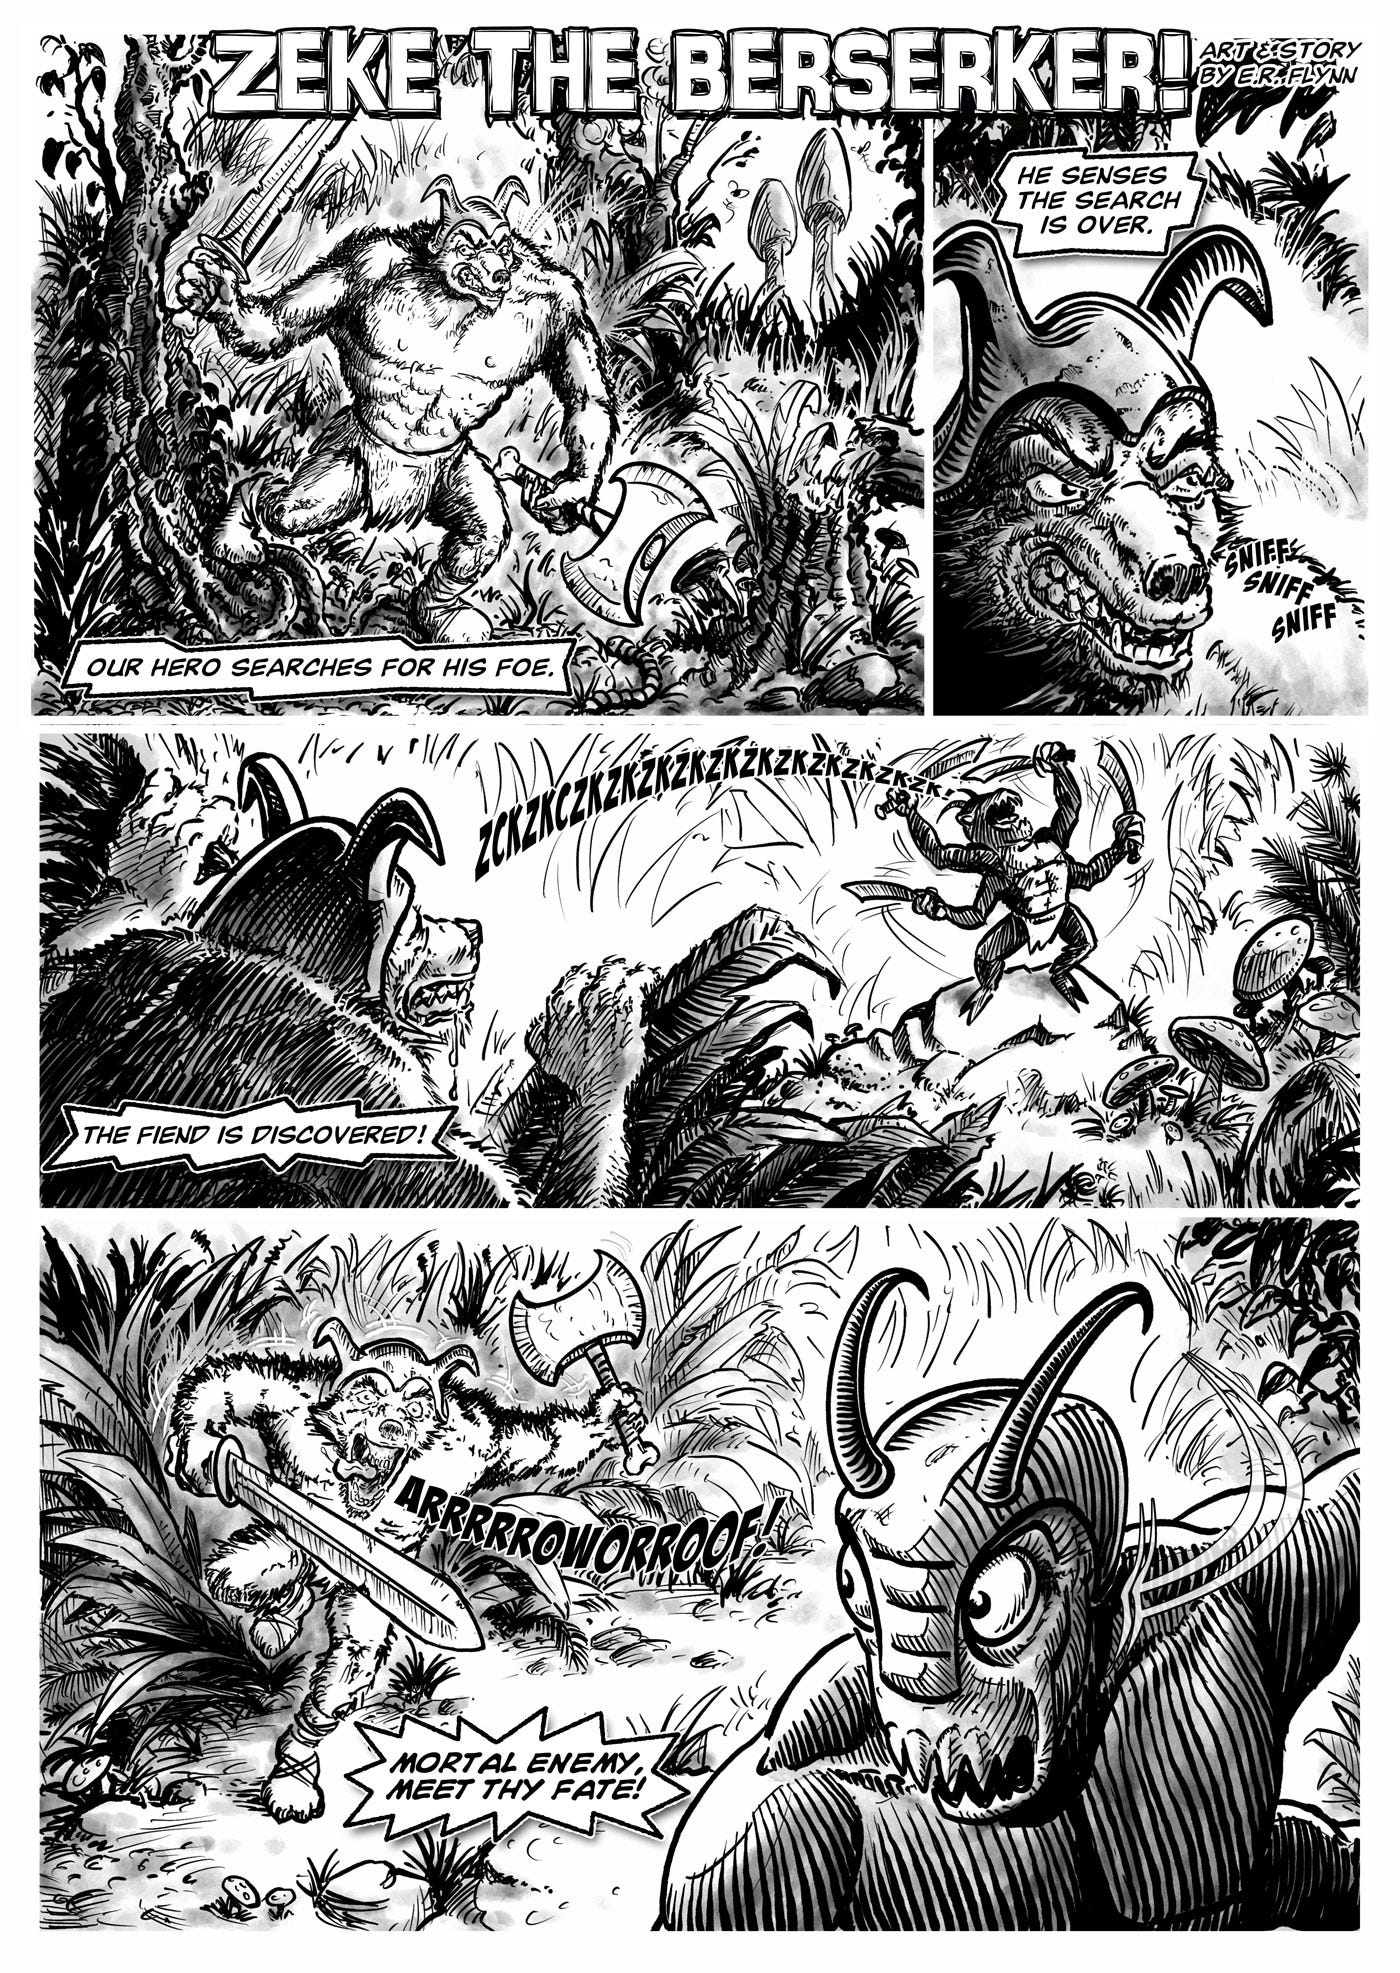 Zeke the Berserker Page 1 Comic by ER Flynn